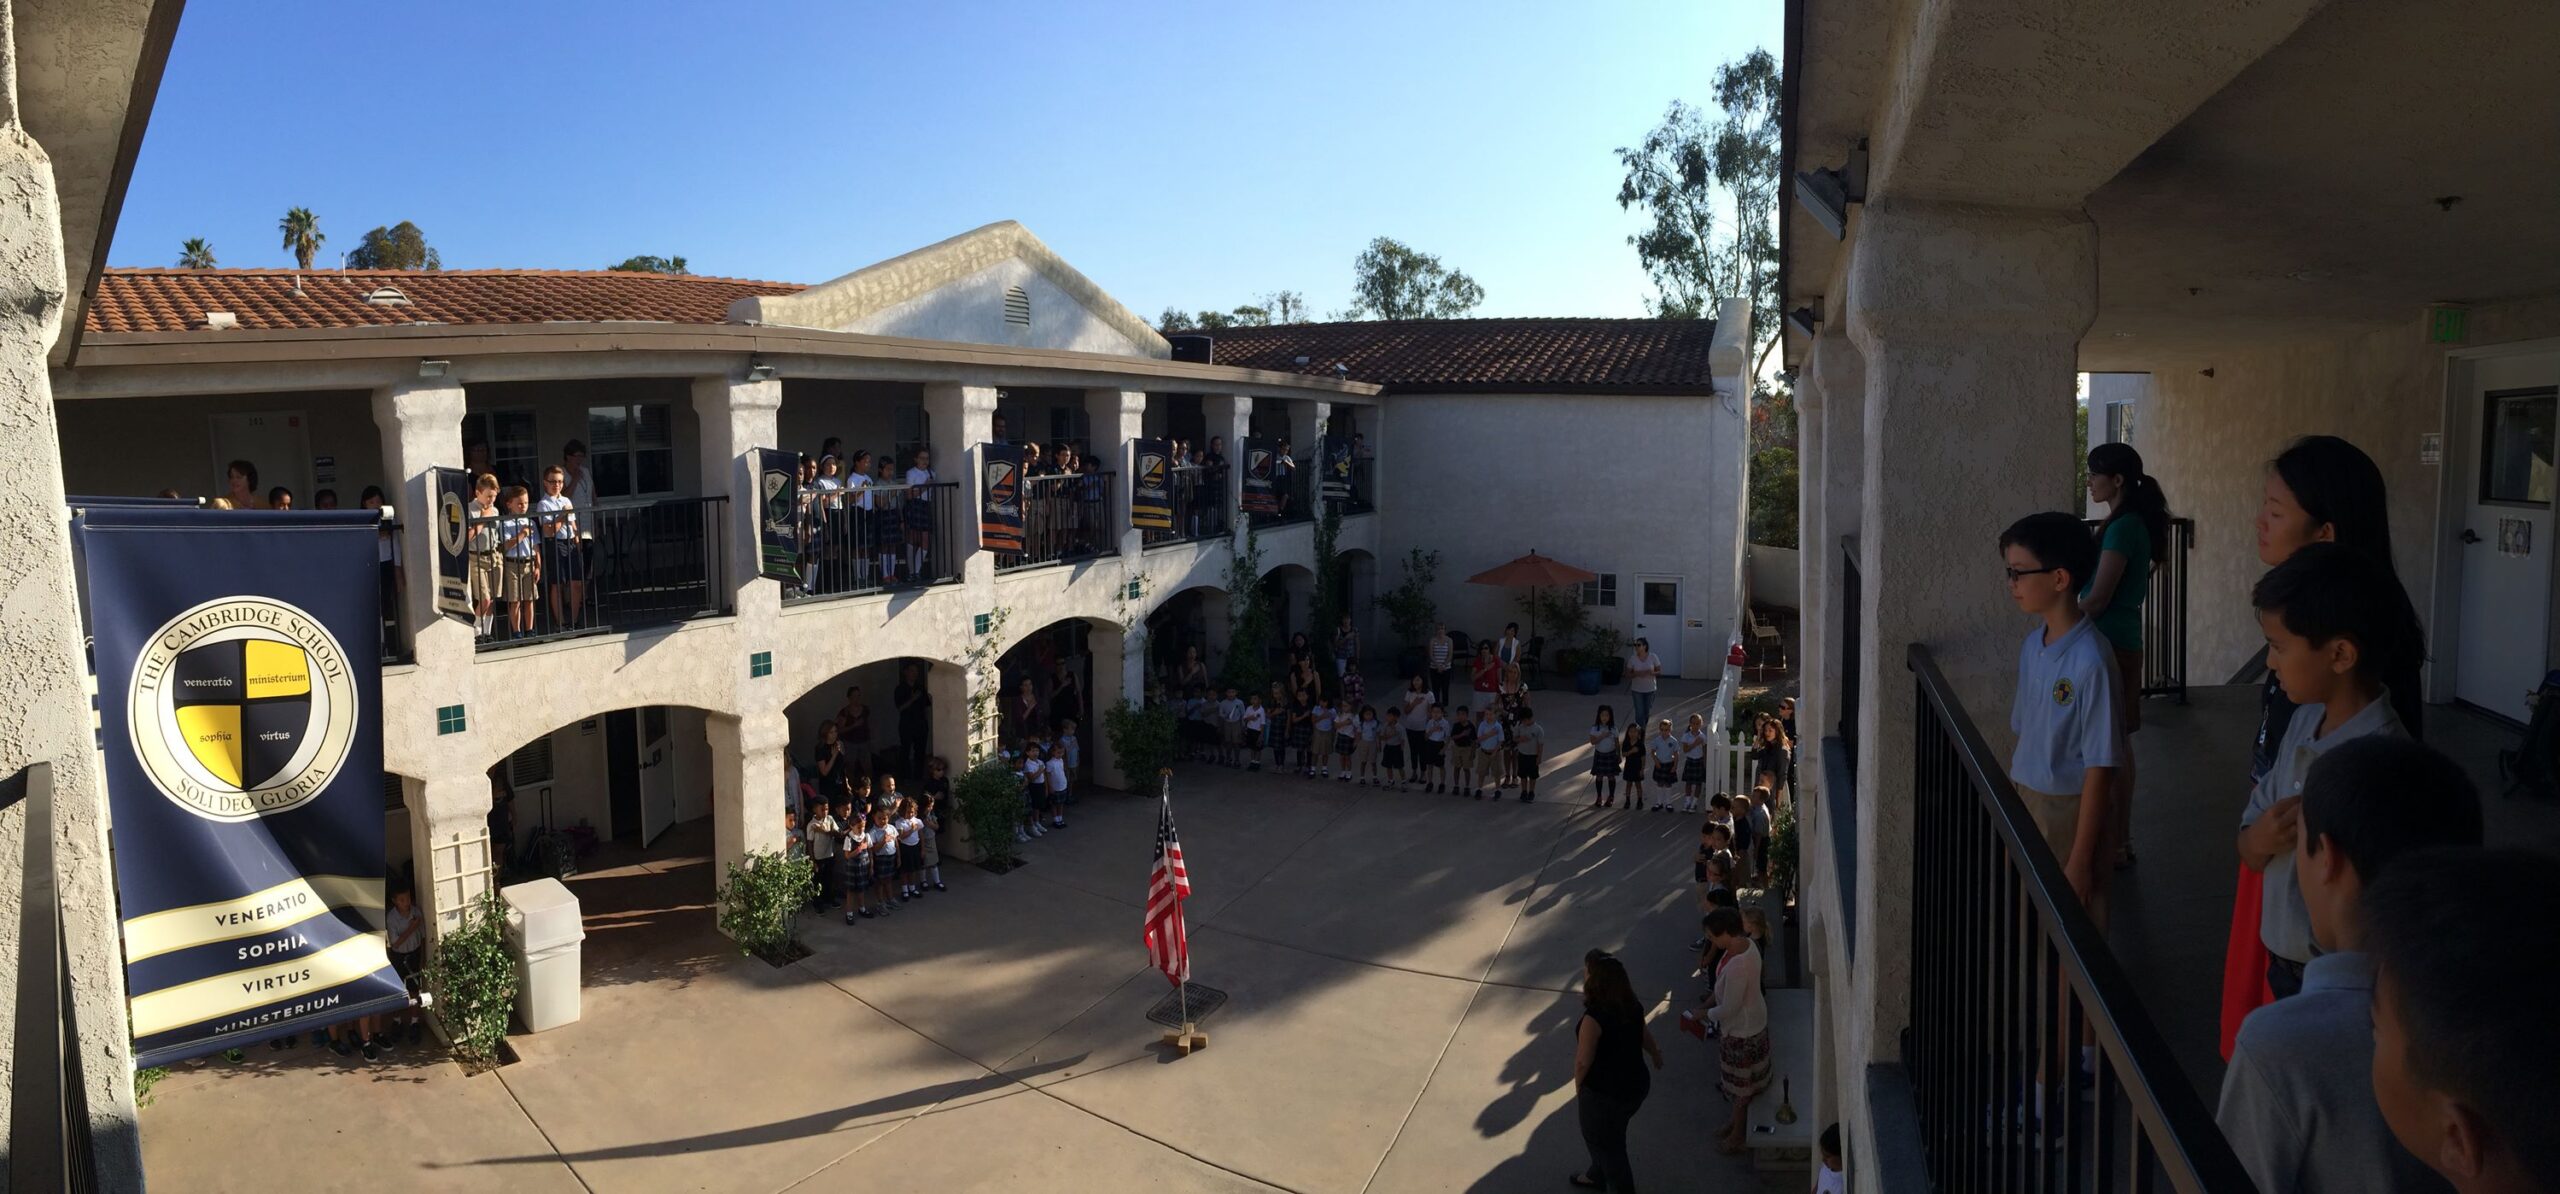 The Cambridge School – San Diego